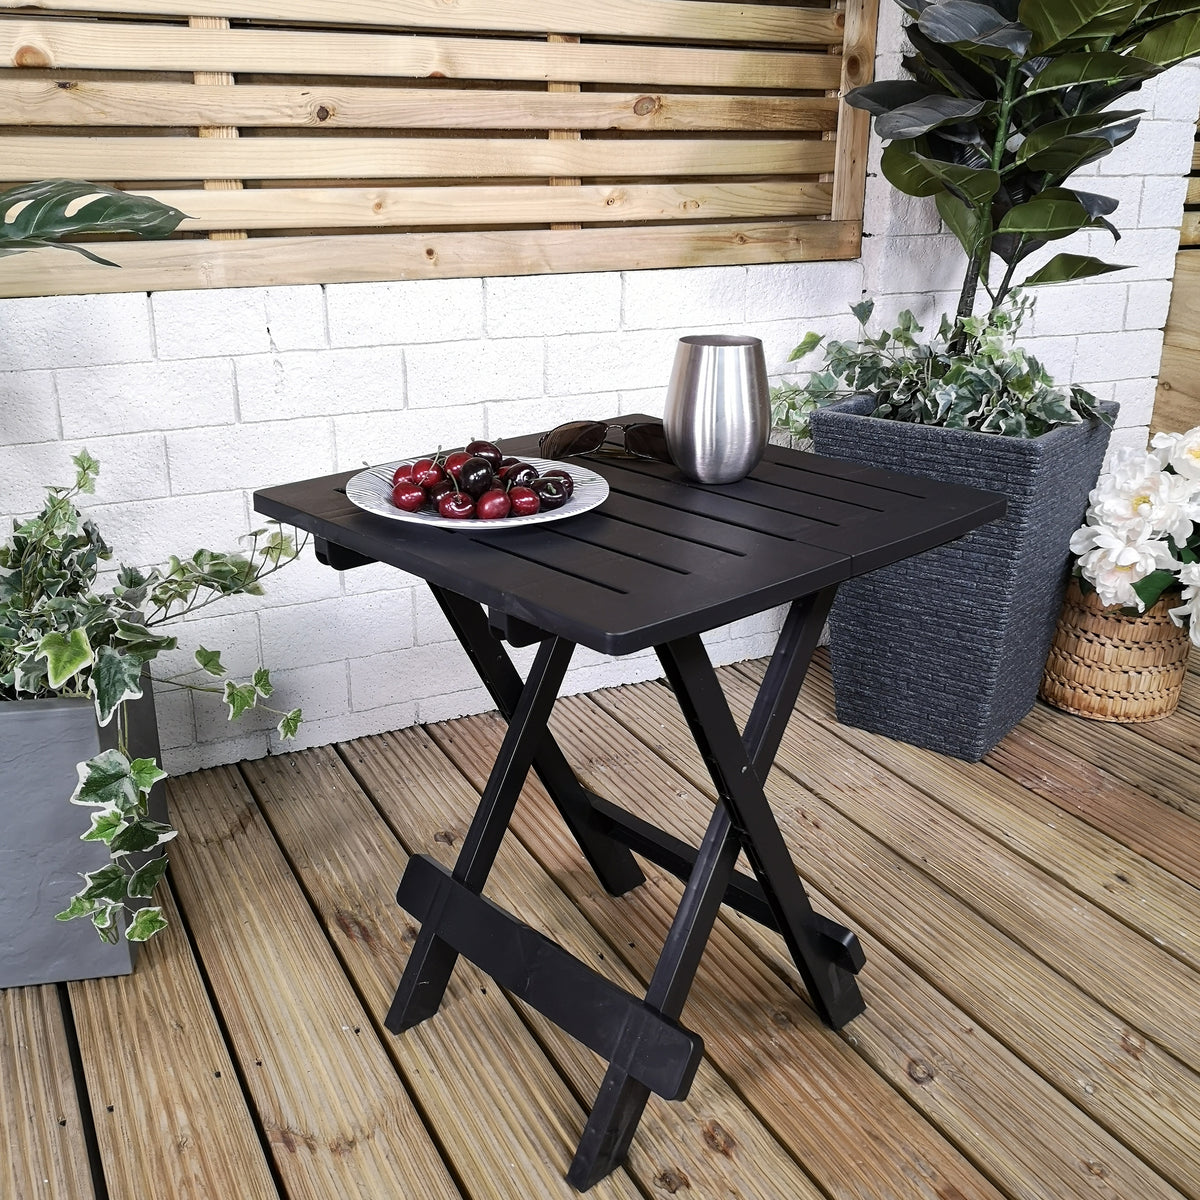 Black Lightweight Portable Folding Outdoor Table